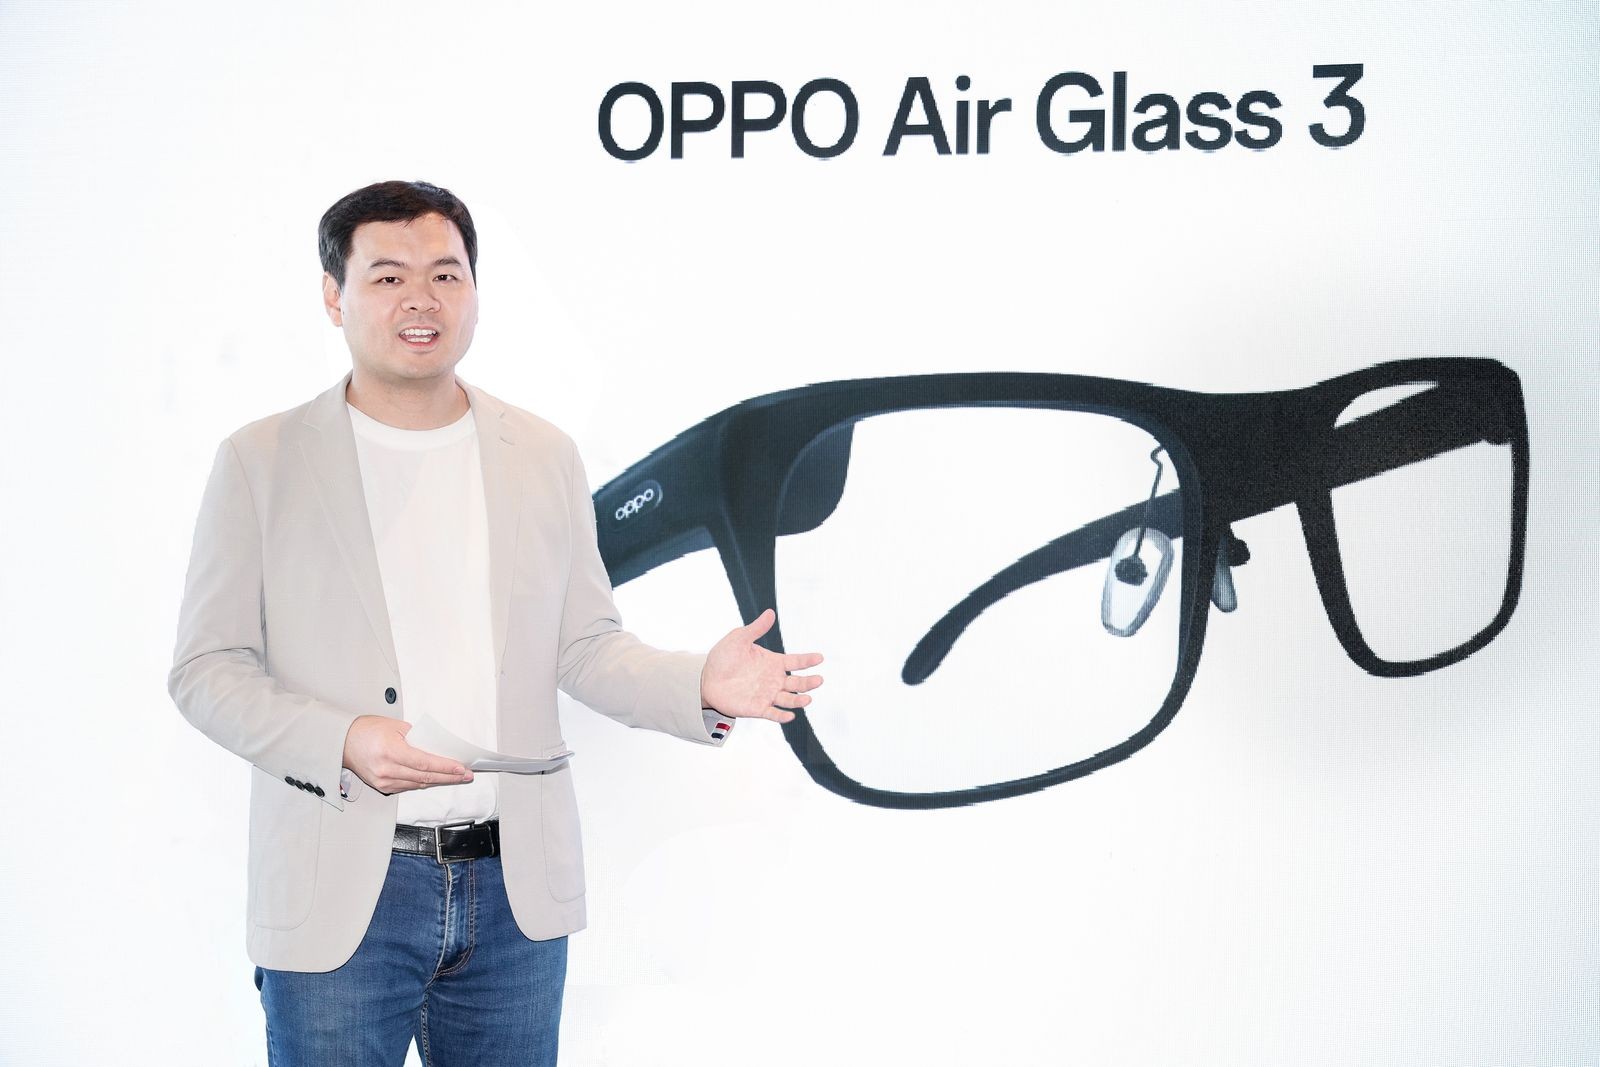 oppo-air-glass-3-on-site-4-1709177467.jpg